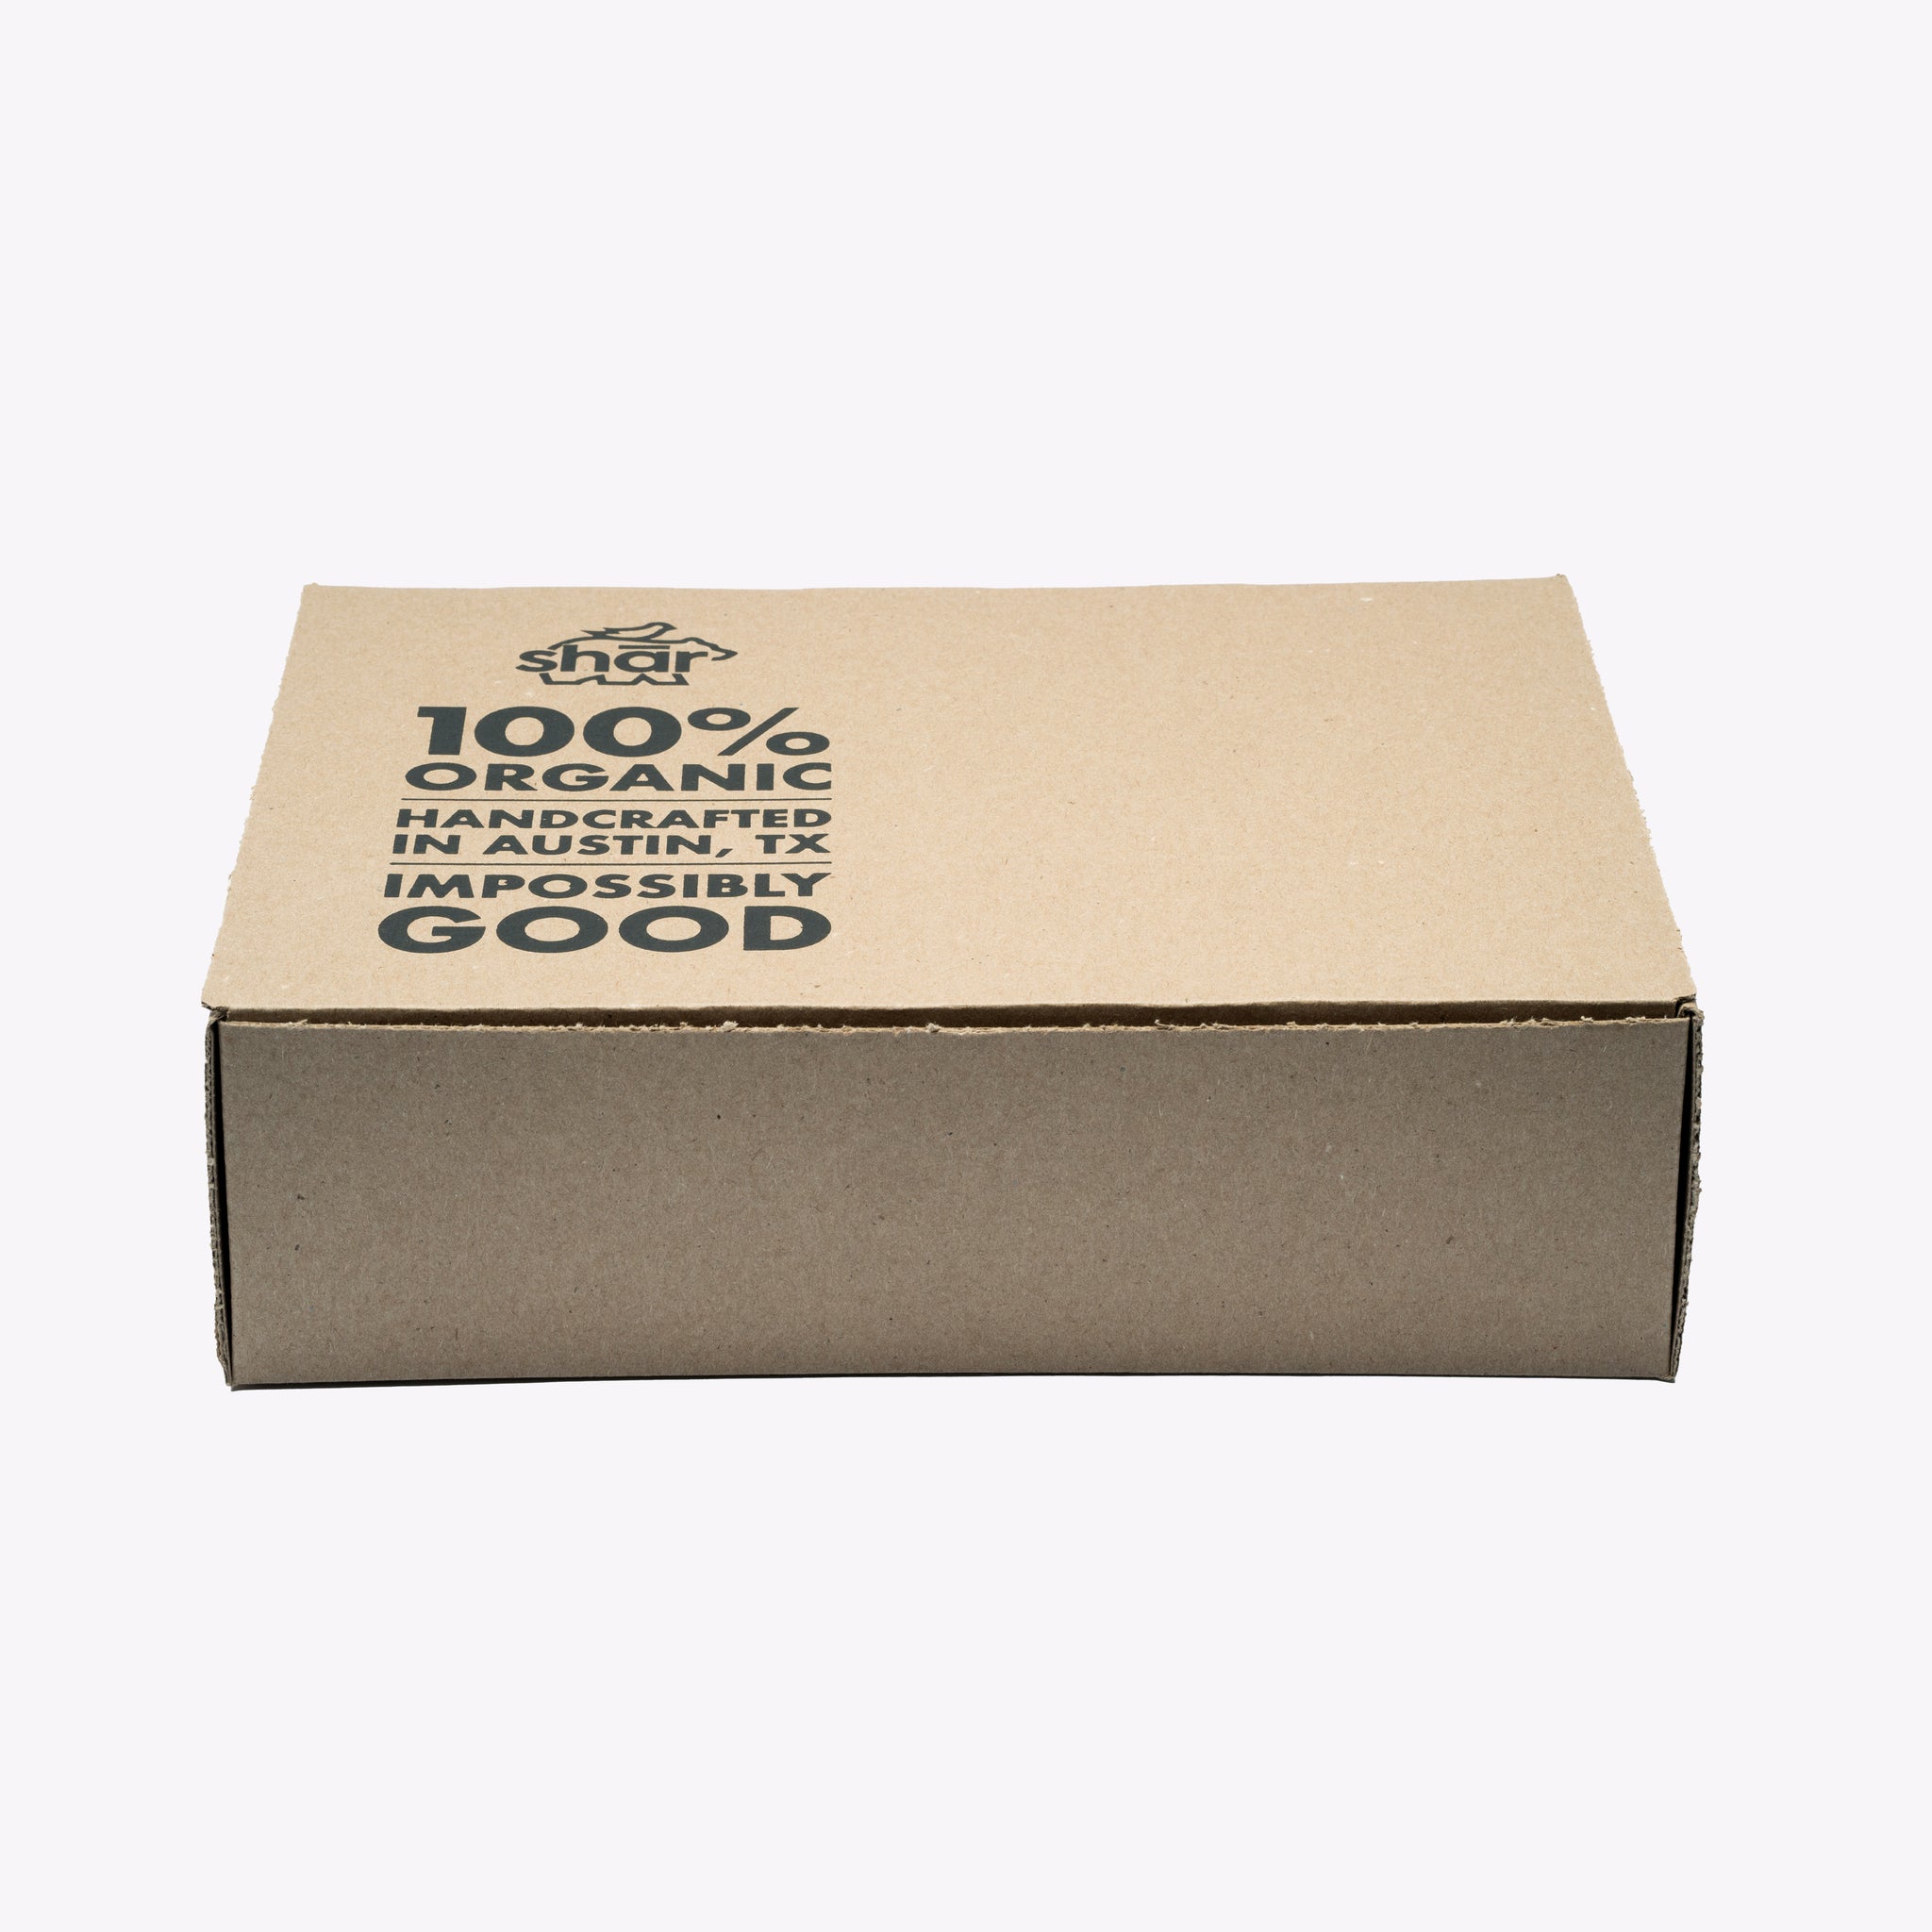 6.0 lb grain-free shār box – Savory trail mix